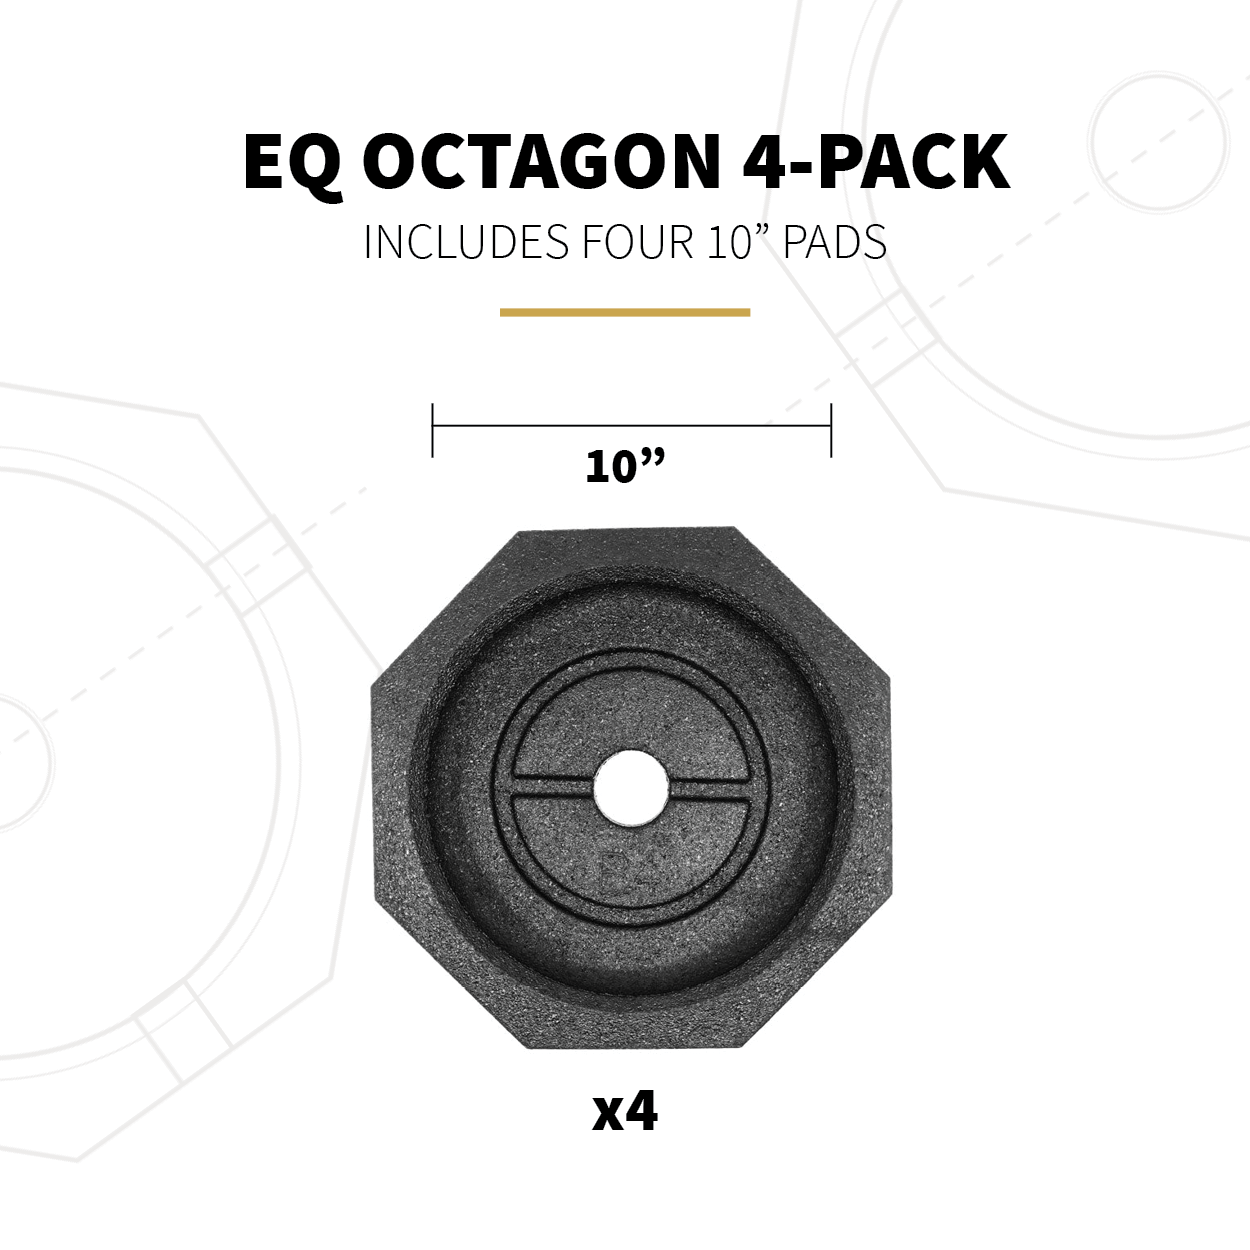 EQ Octagon 4-Pack Specs